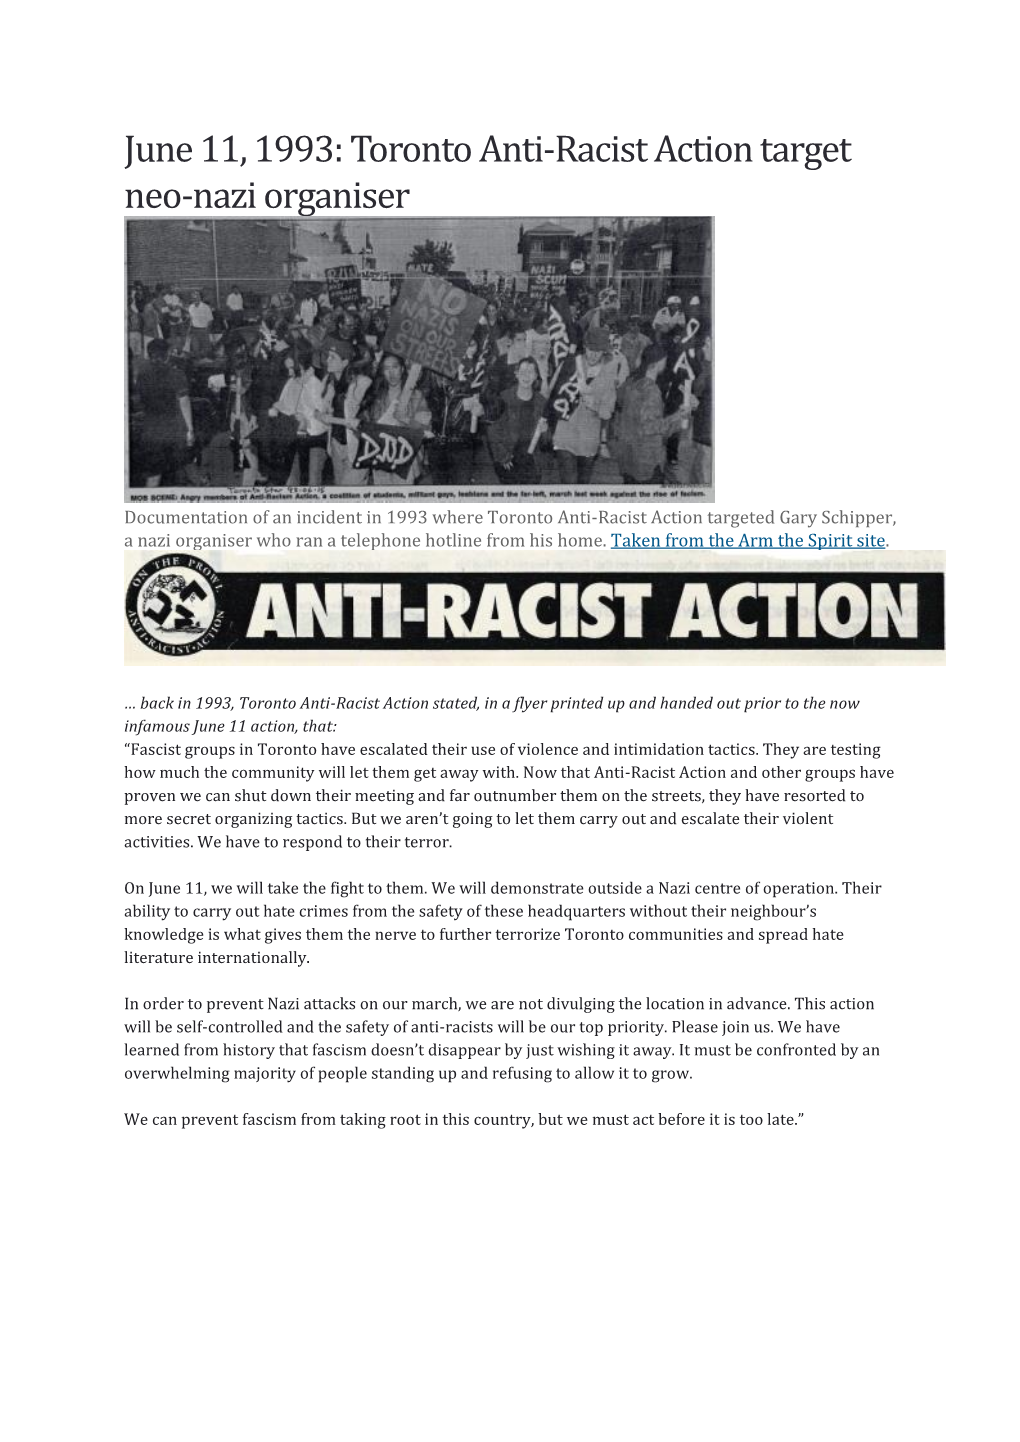 Toronto Anti-Racist Action Target Neo-Nazi Organiser